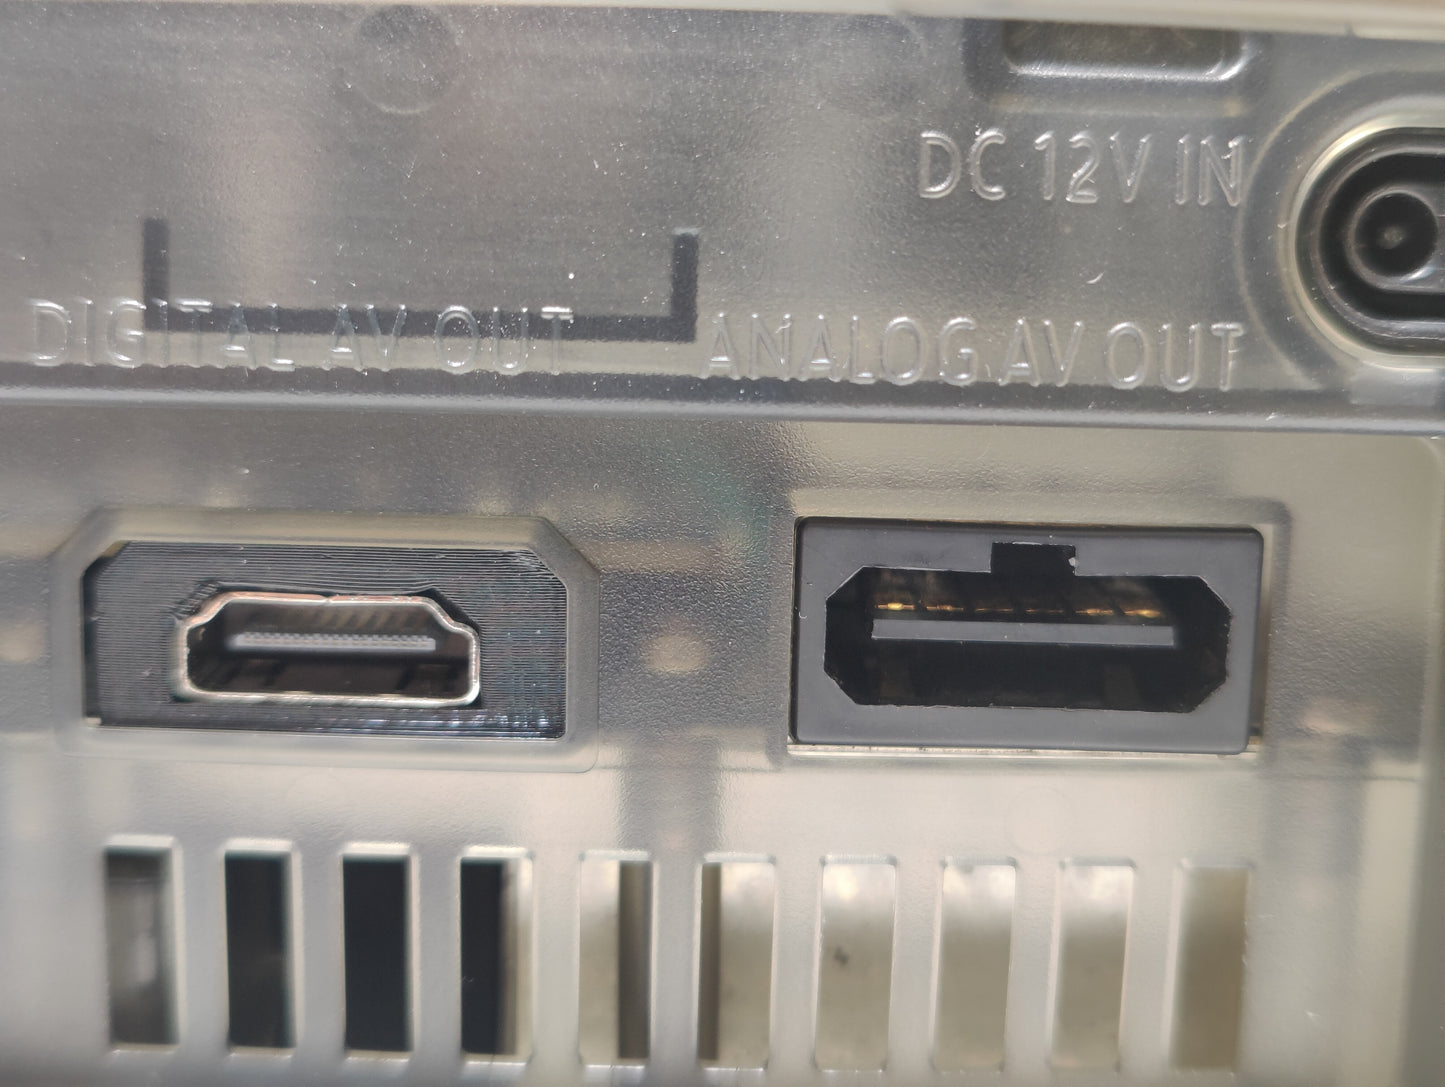 Nintendo GameCube Black Transparent with PICOBOOT + PLUTO-IIx HDMI +128GB MicroSD #119